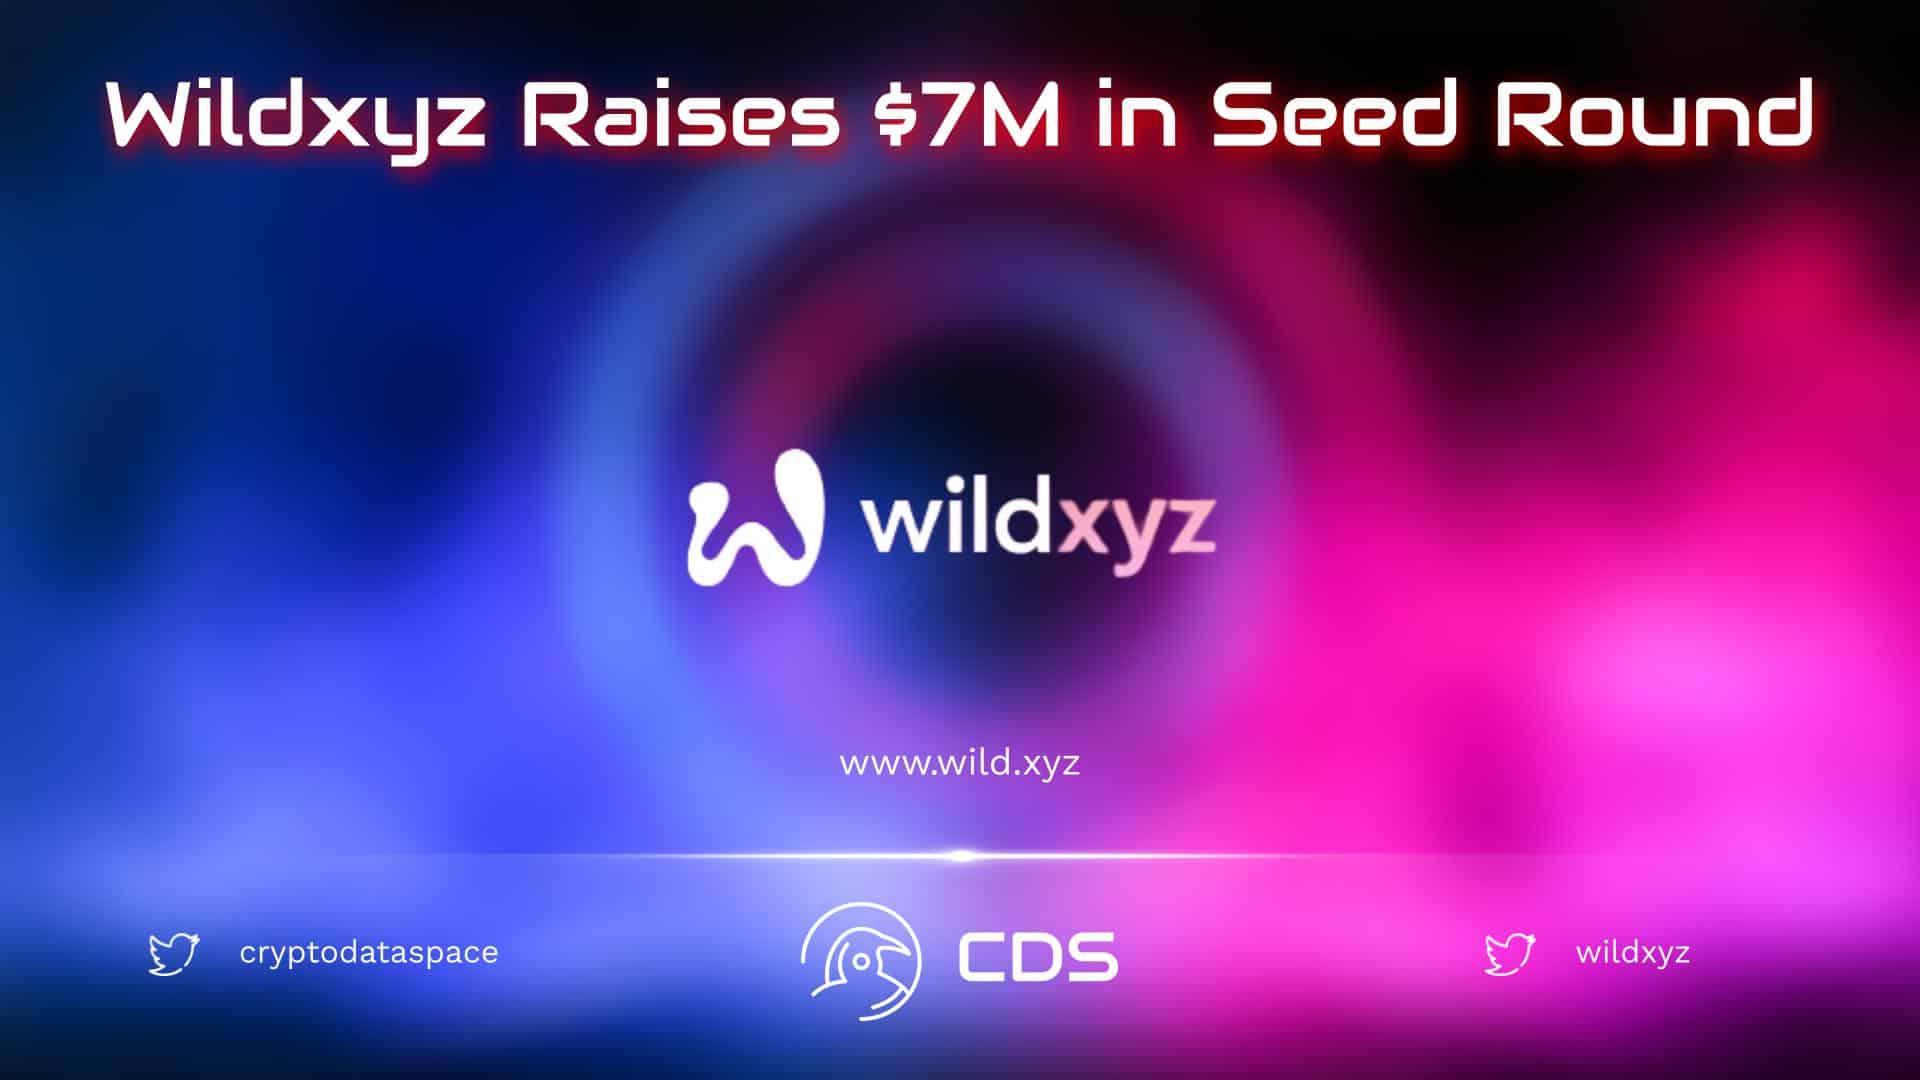 Wildxyz Raises $7M in Seed Round